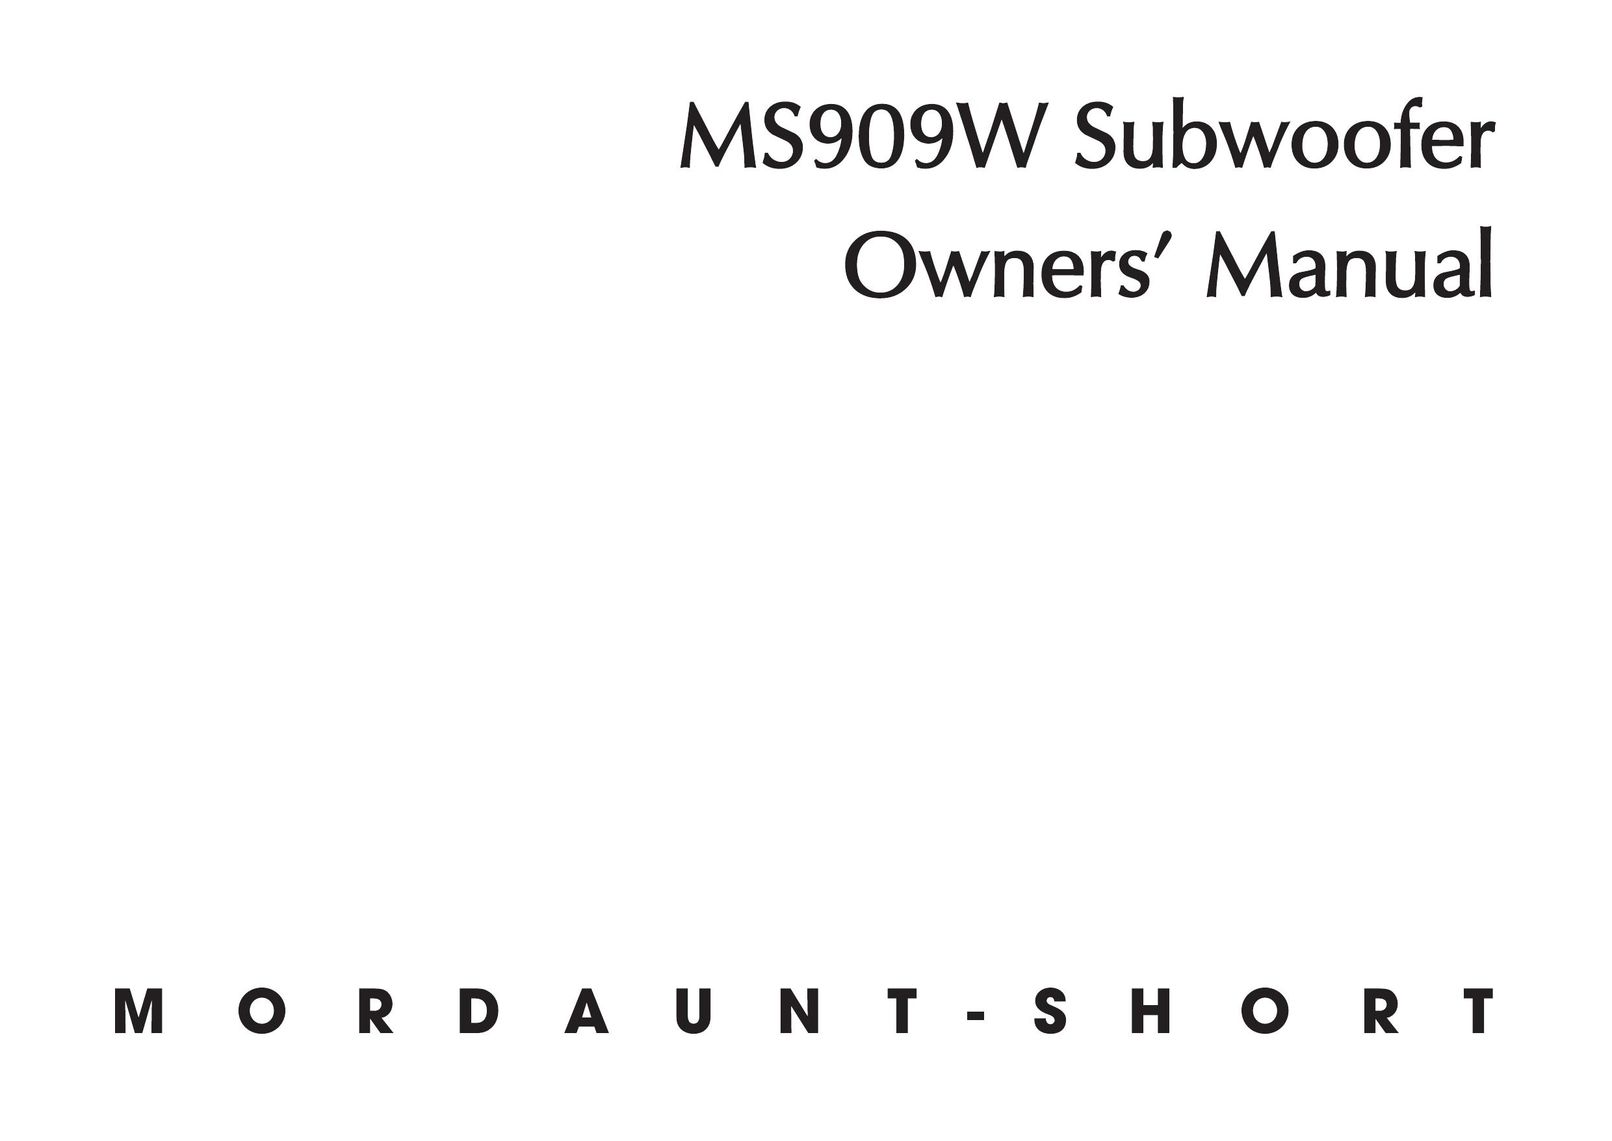 Mordaunt-Short MS909W Speaker User Manual